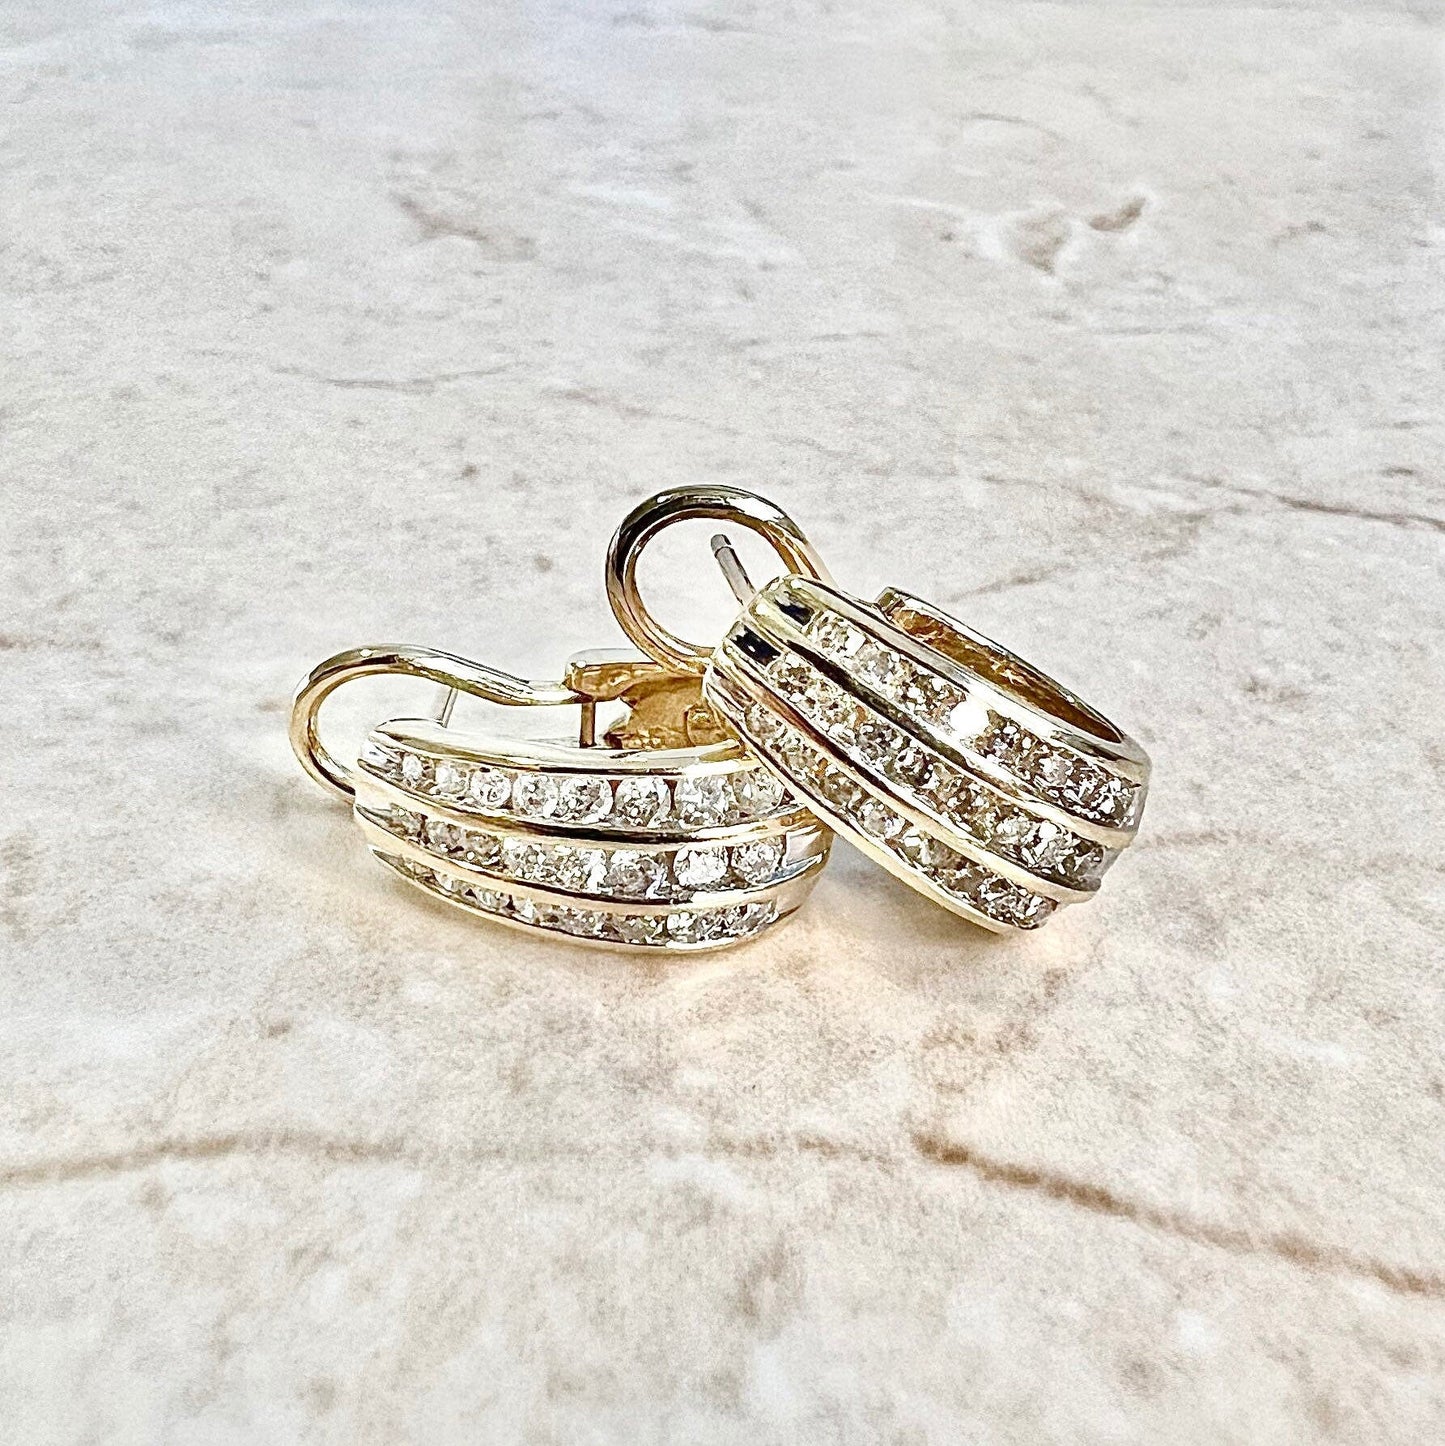 1 CTTW 14K Diamond Huggie Earrings - 3 Row Yellow Gold Diamond Earrings - Earclip Earrings - Best Gifts For Her - Diamond Bridal Earrings